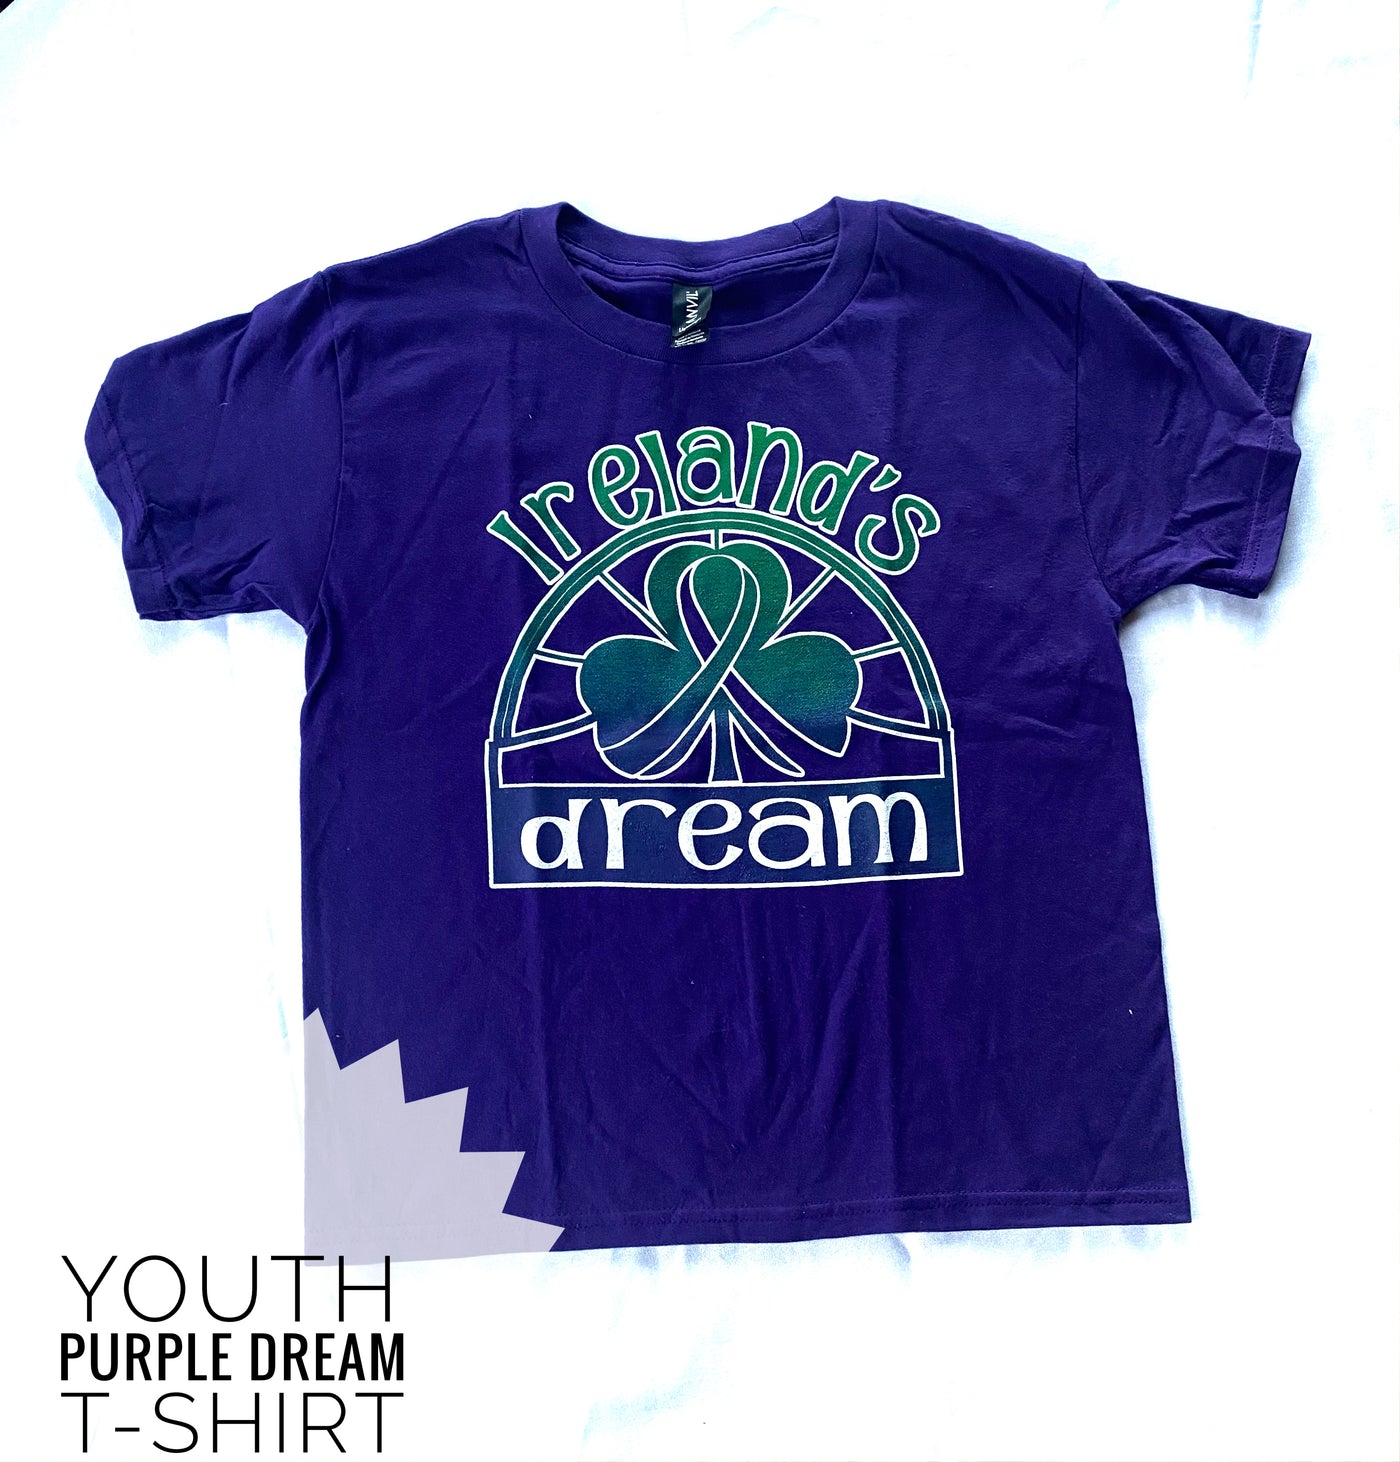 Youth Purple Shirt